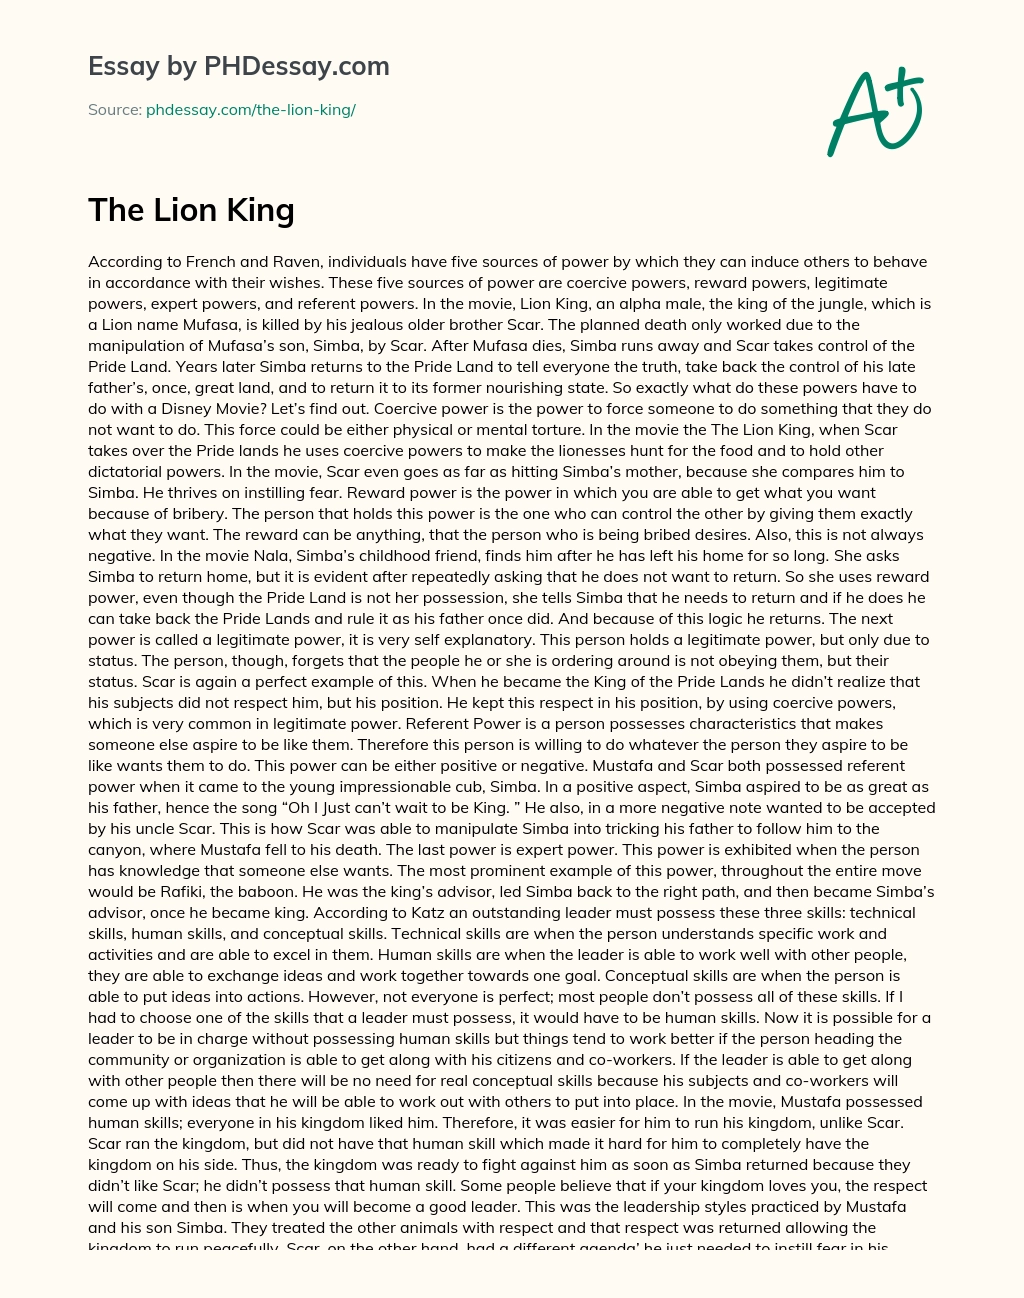 the lion king summary essay